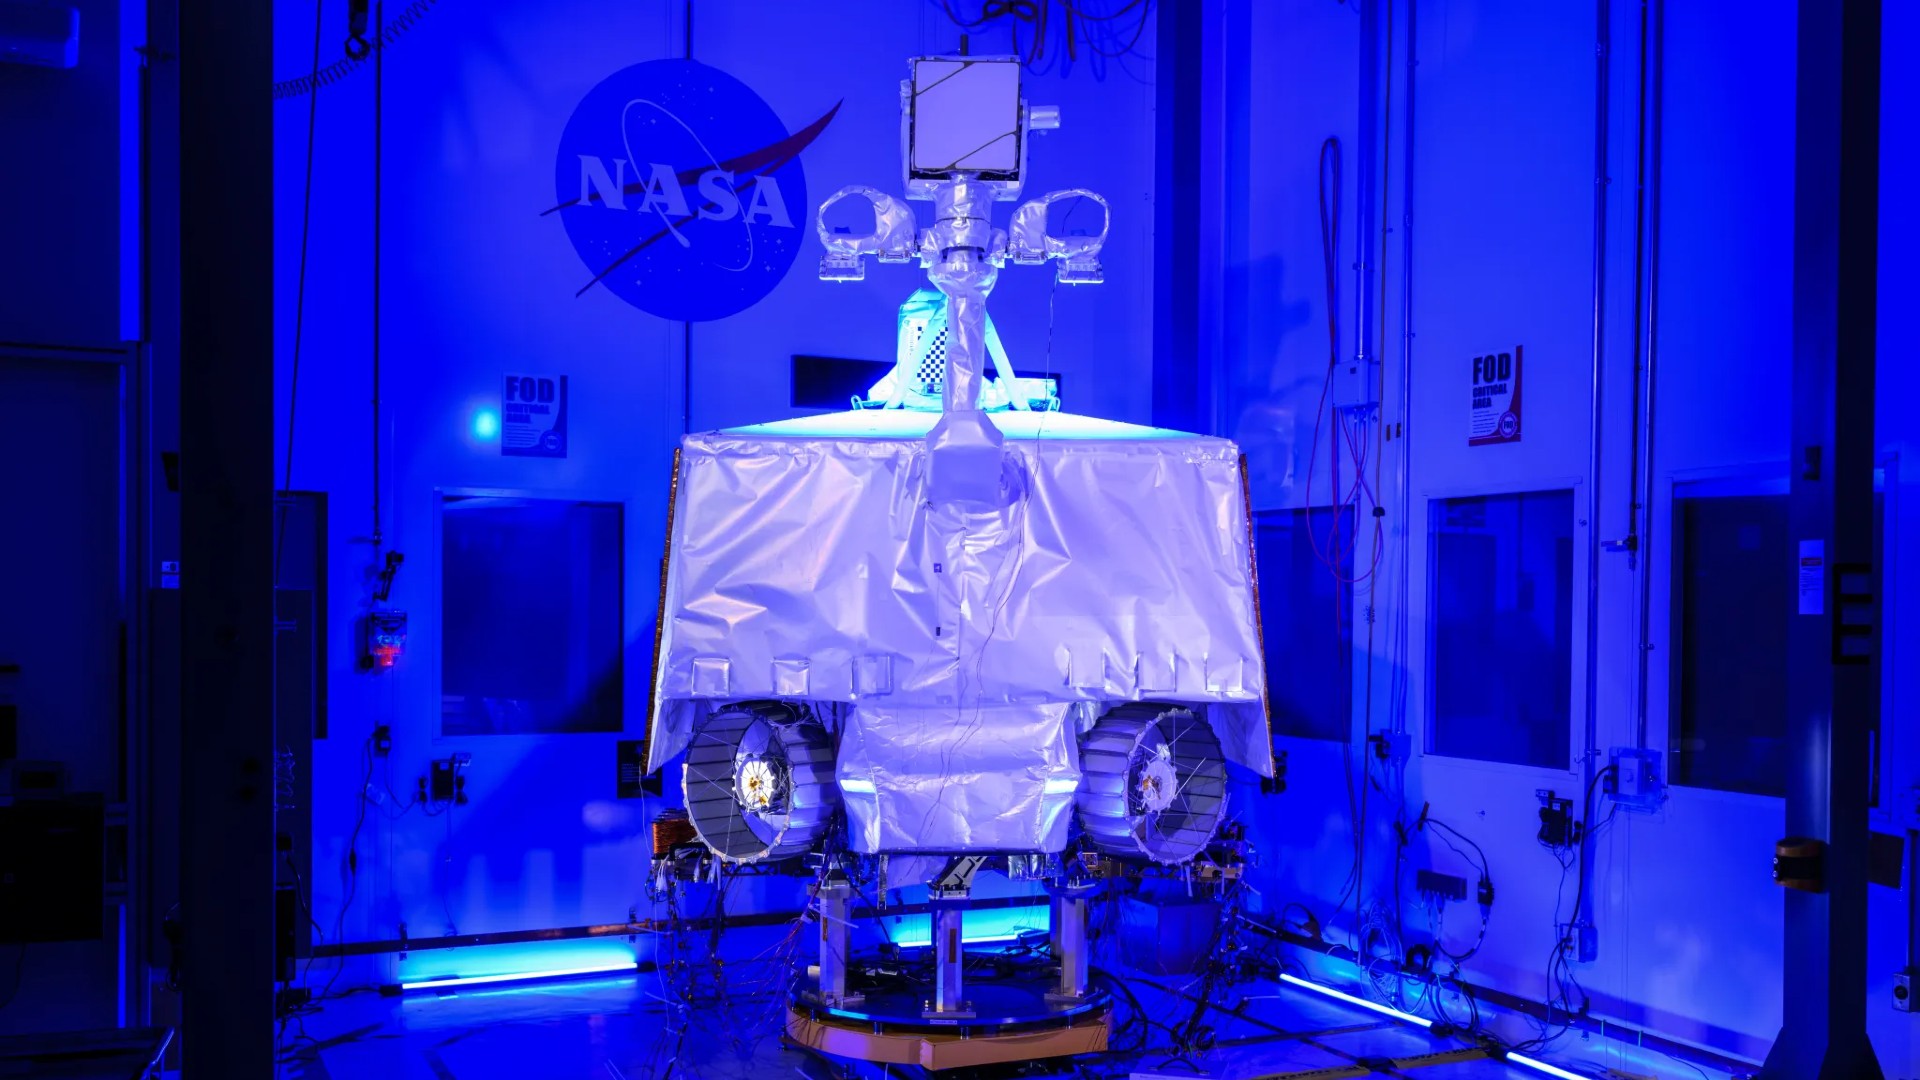  NASA cancels $450 million VIPER moon rover due to budget concerns 